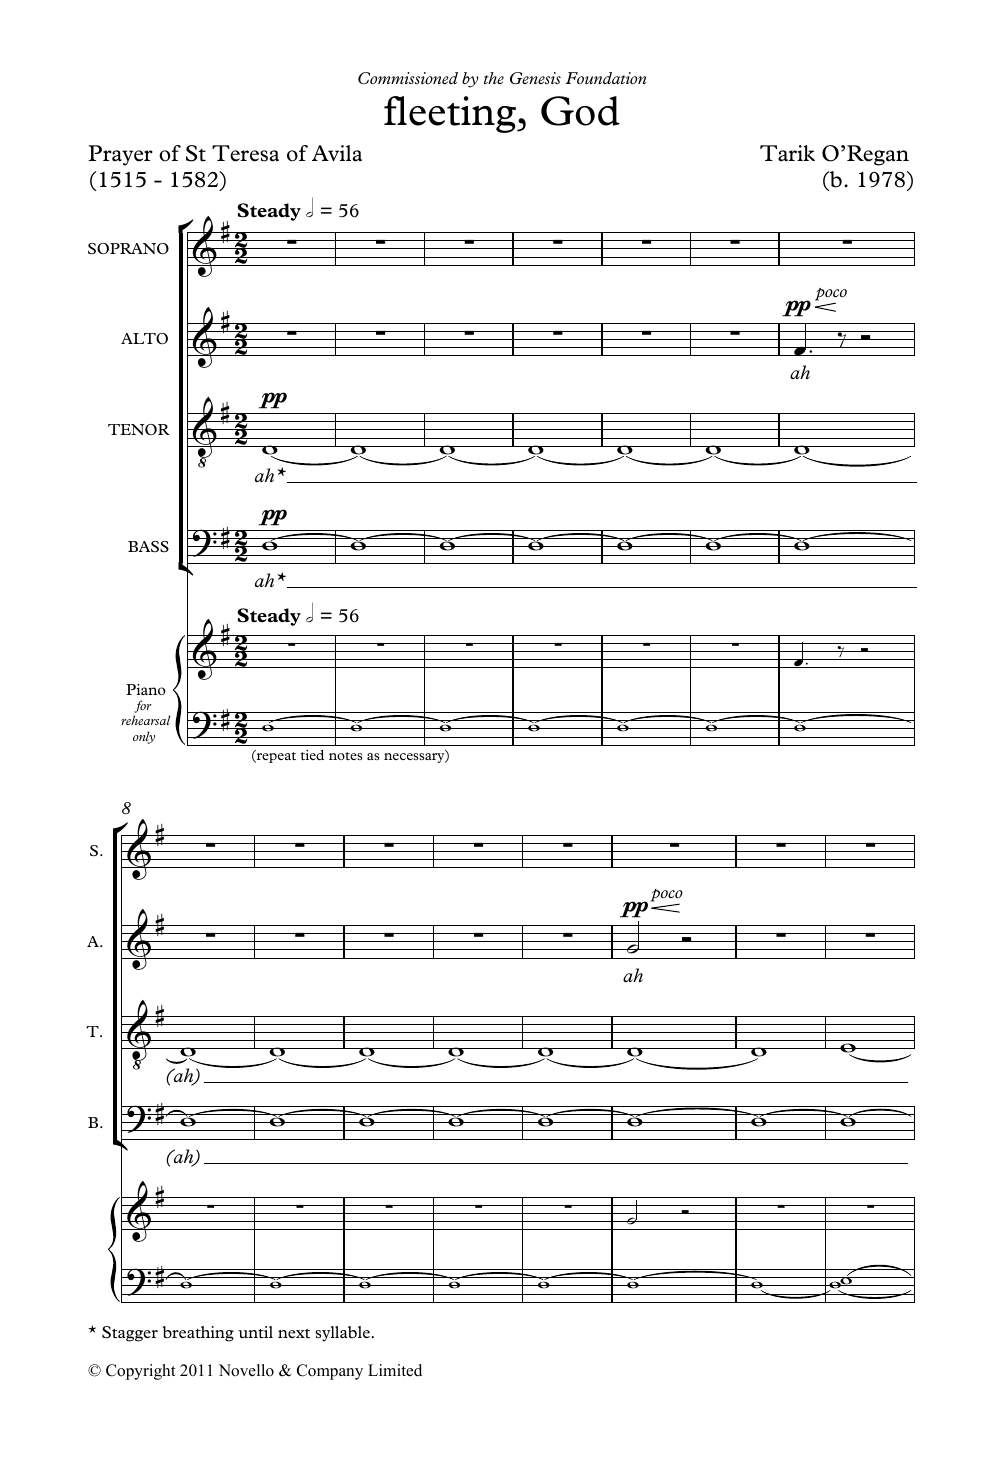 Download Tarik O'Regan Fleeting, God Sheet Music and learn how to play SATB Choir PDF digital score in minutes